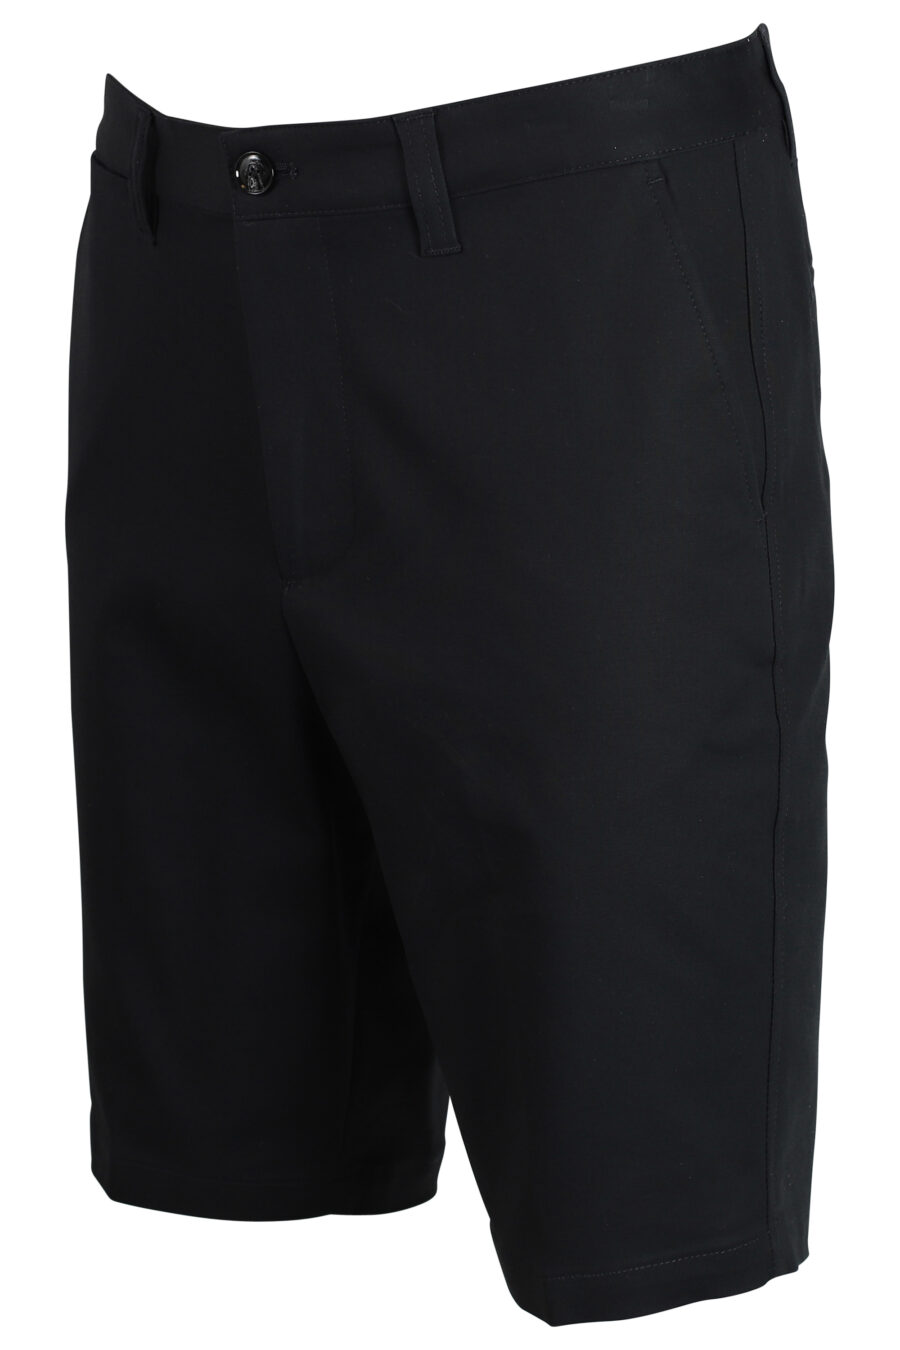 Dunkelblaue Shorts mit Mini-Logo - 8057163302535 2